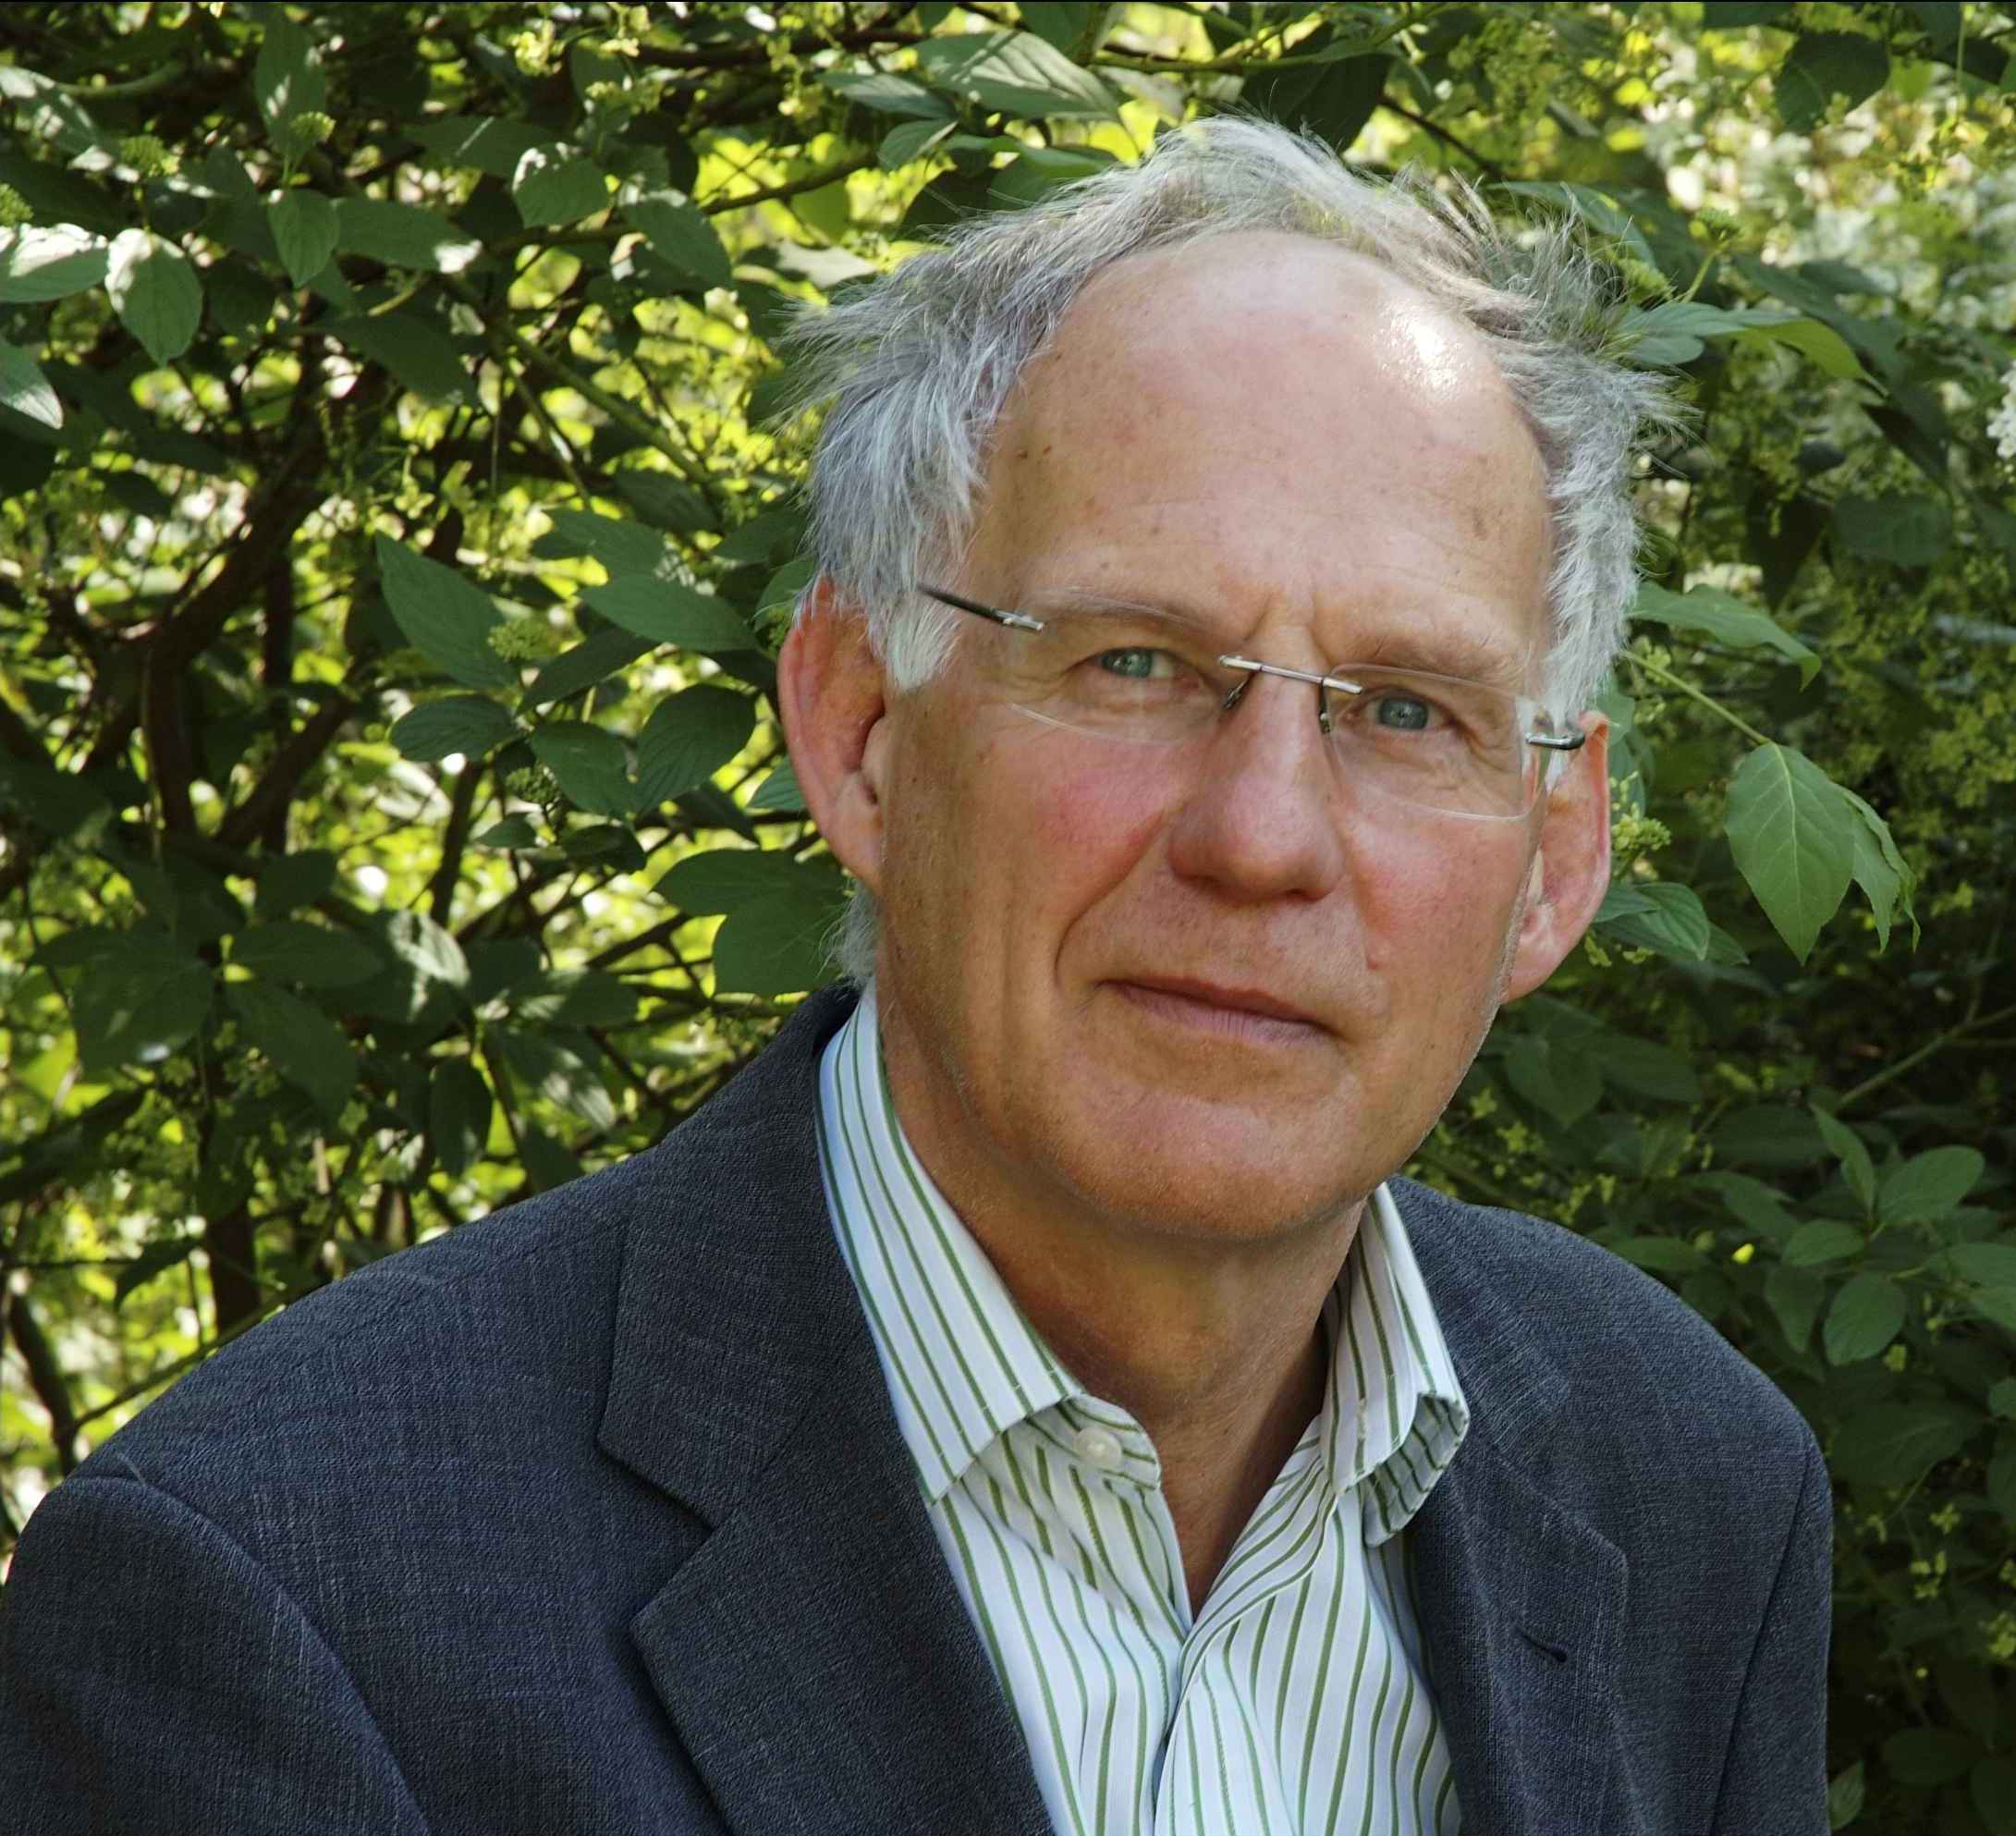 Prof. Dr. Otfried Höffe